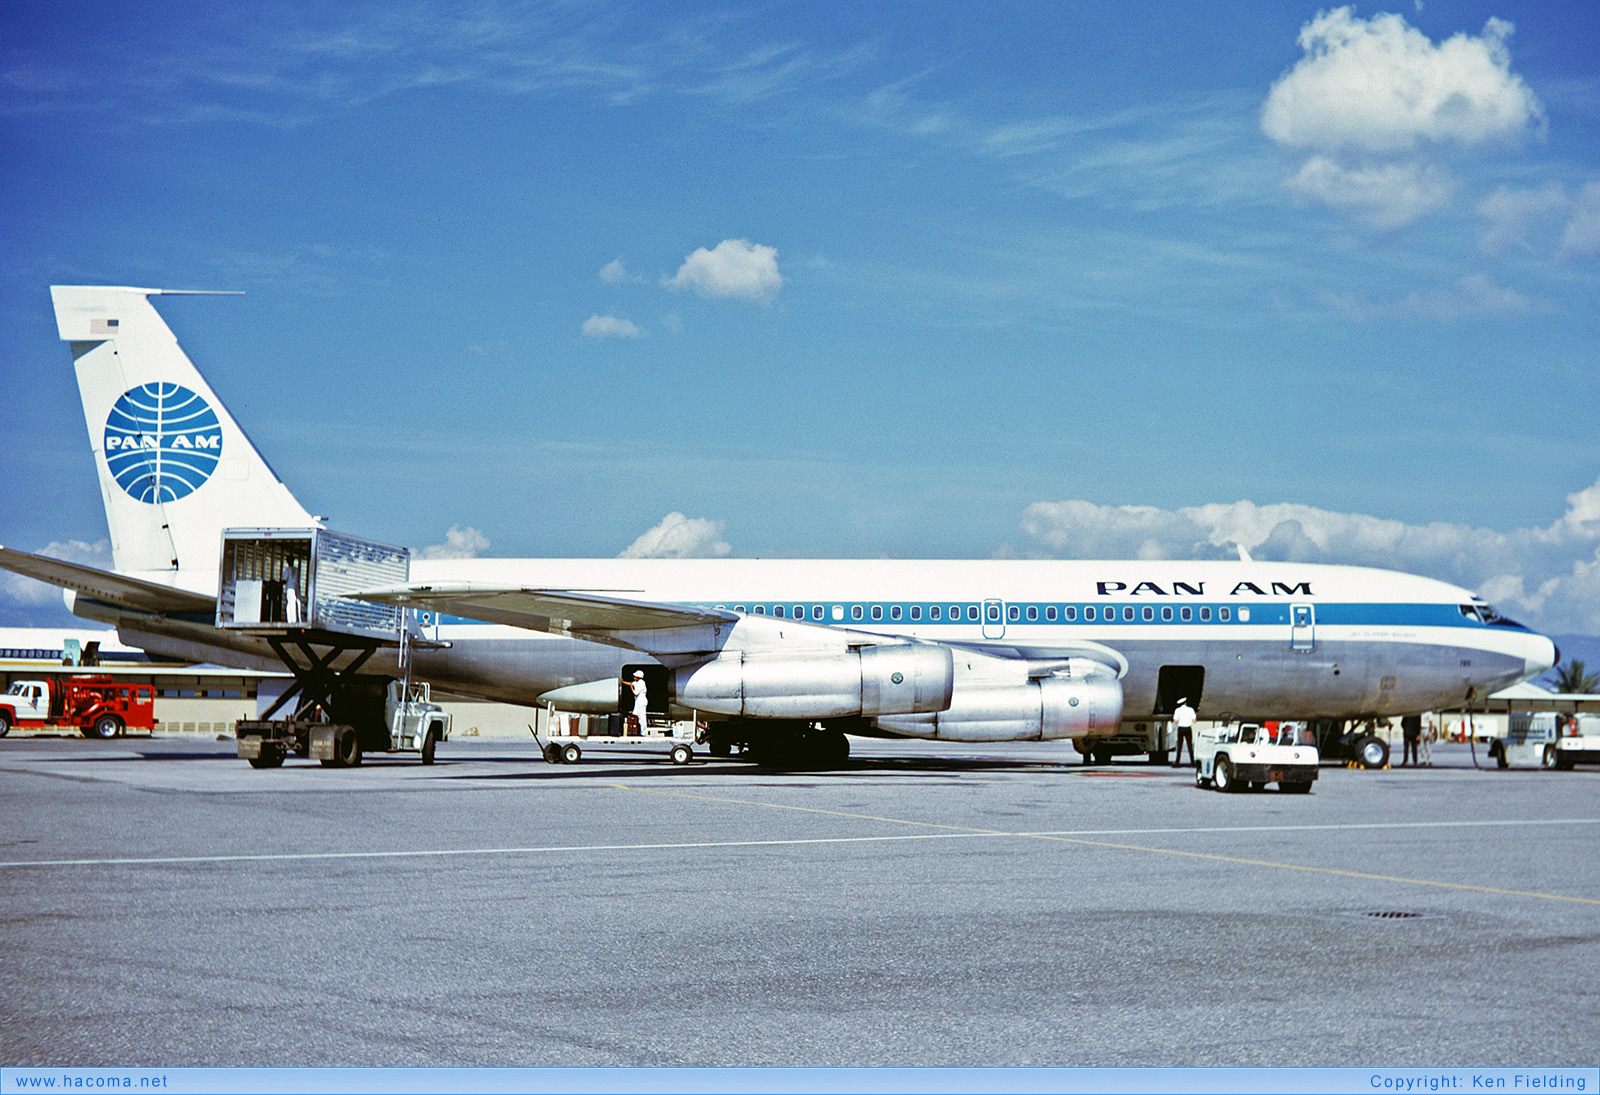 Photo of N785PA - Pan Am Clipper Balboa - Norman Manley International Airport - Jan 18, 1971